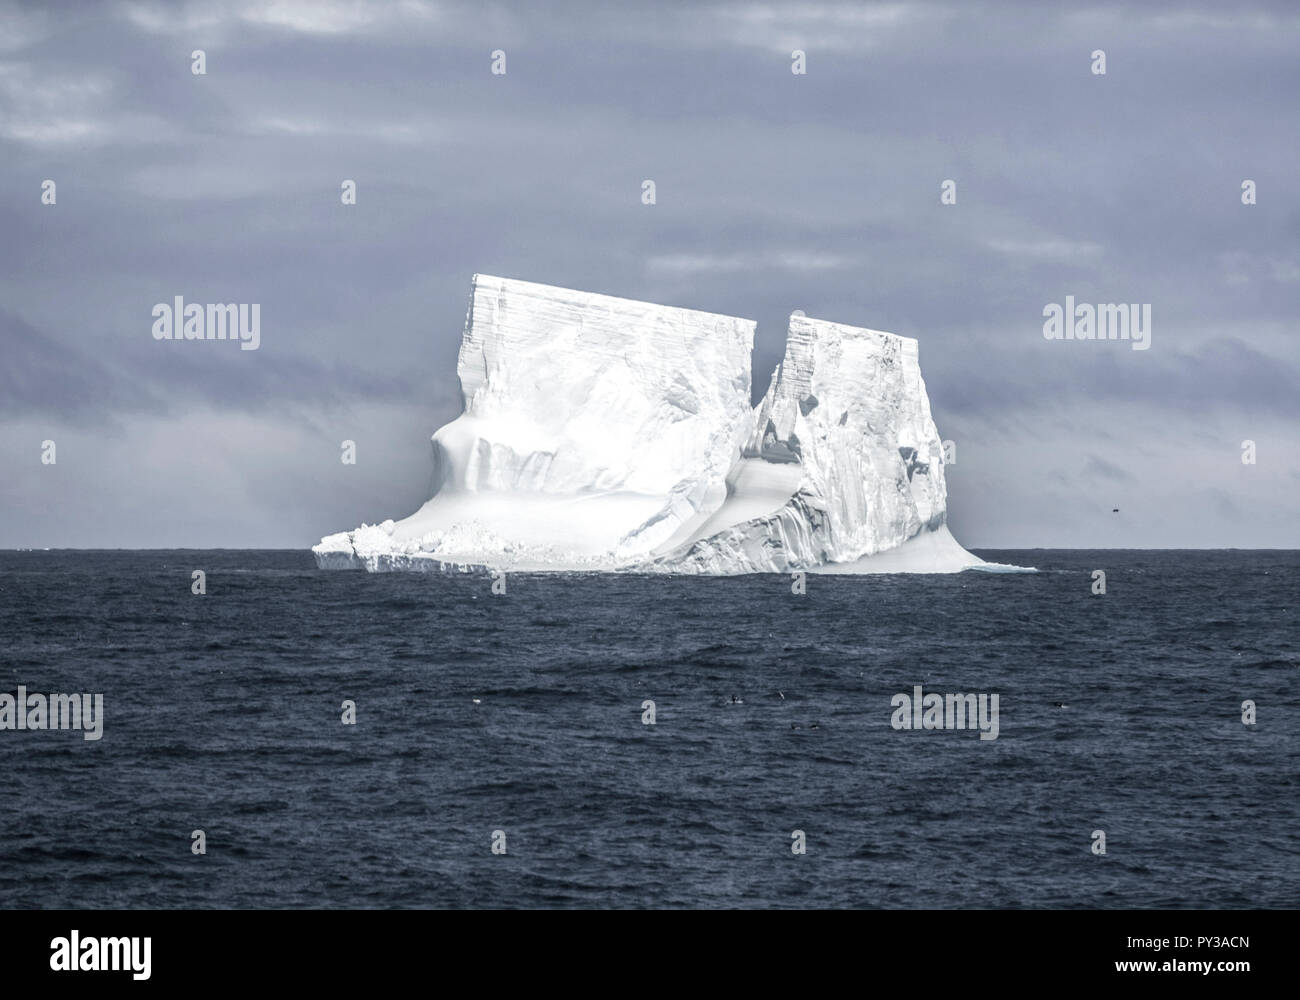 Eisberg im Meer, Suedatlantik Stock Photo